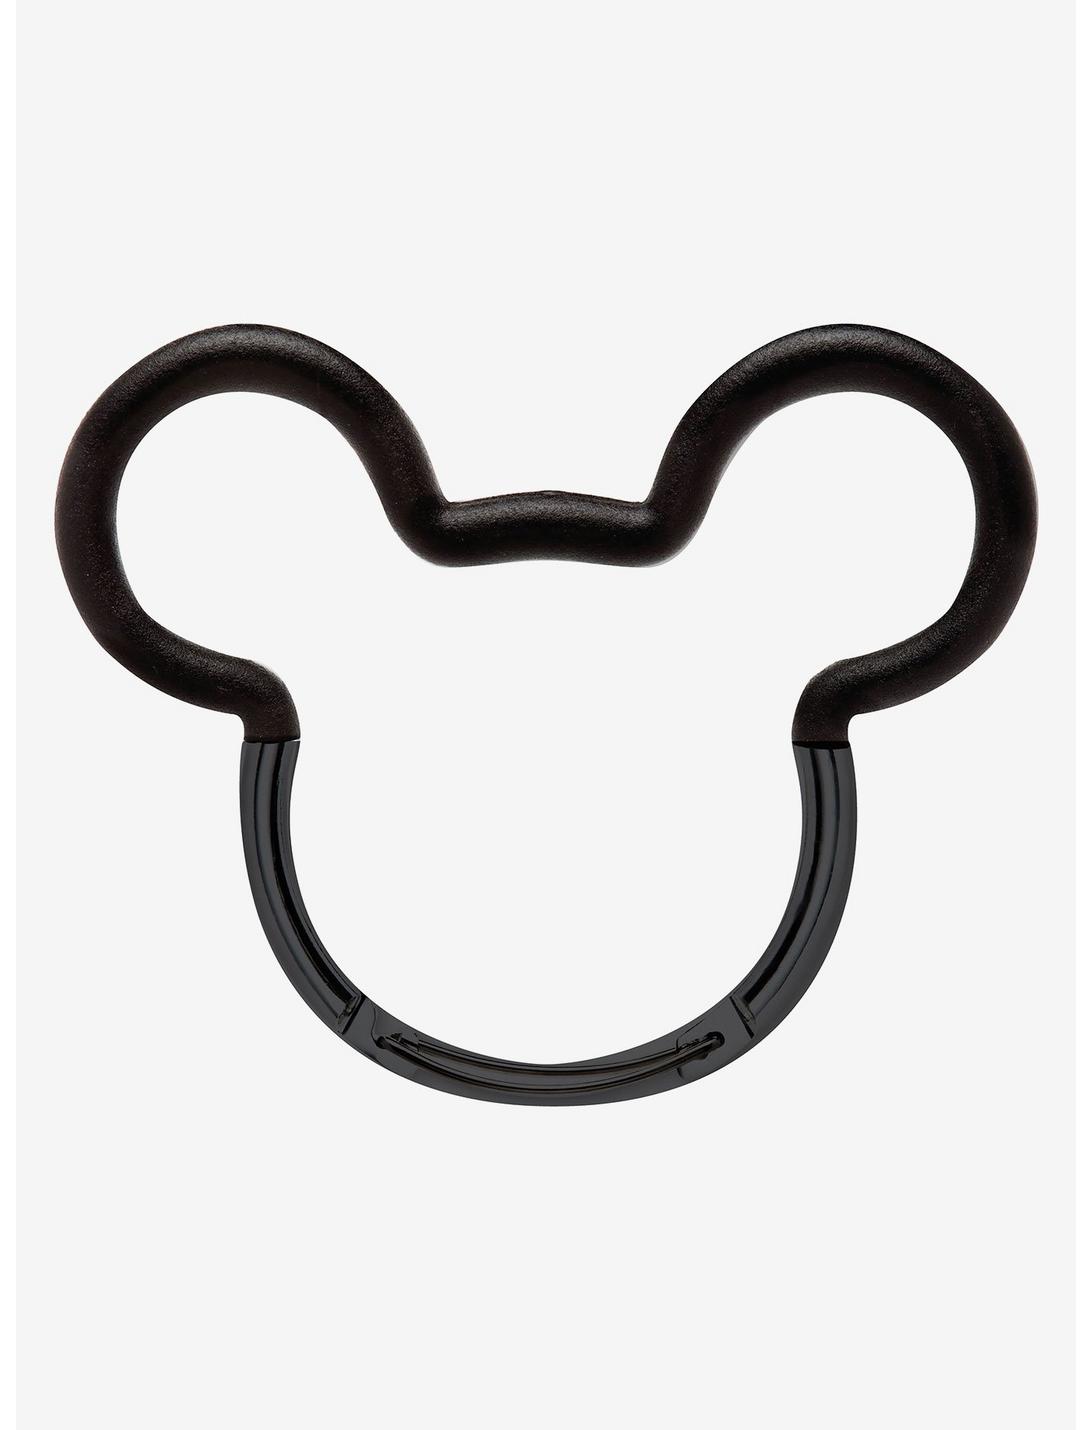 Petunia Pickle Bottom Disneys Mickey Mouse Bag Hook Black, , hi-res